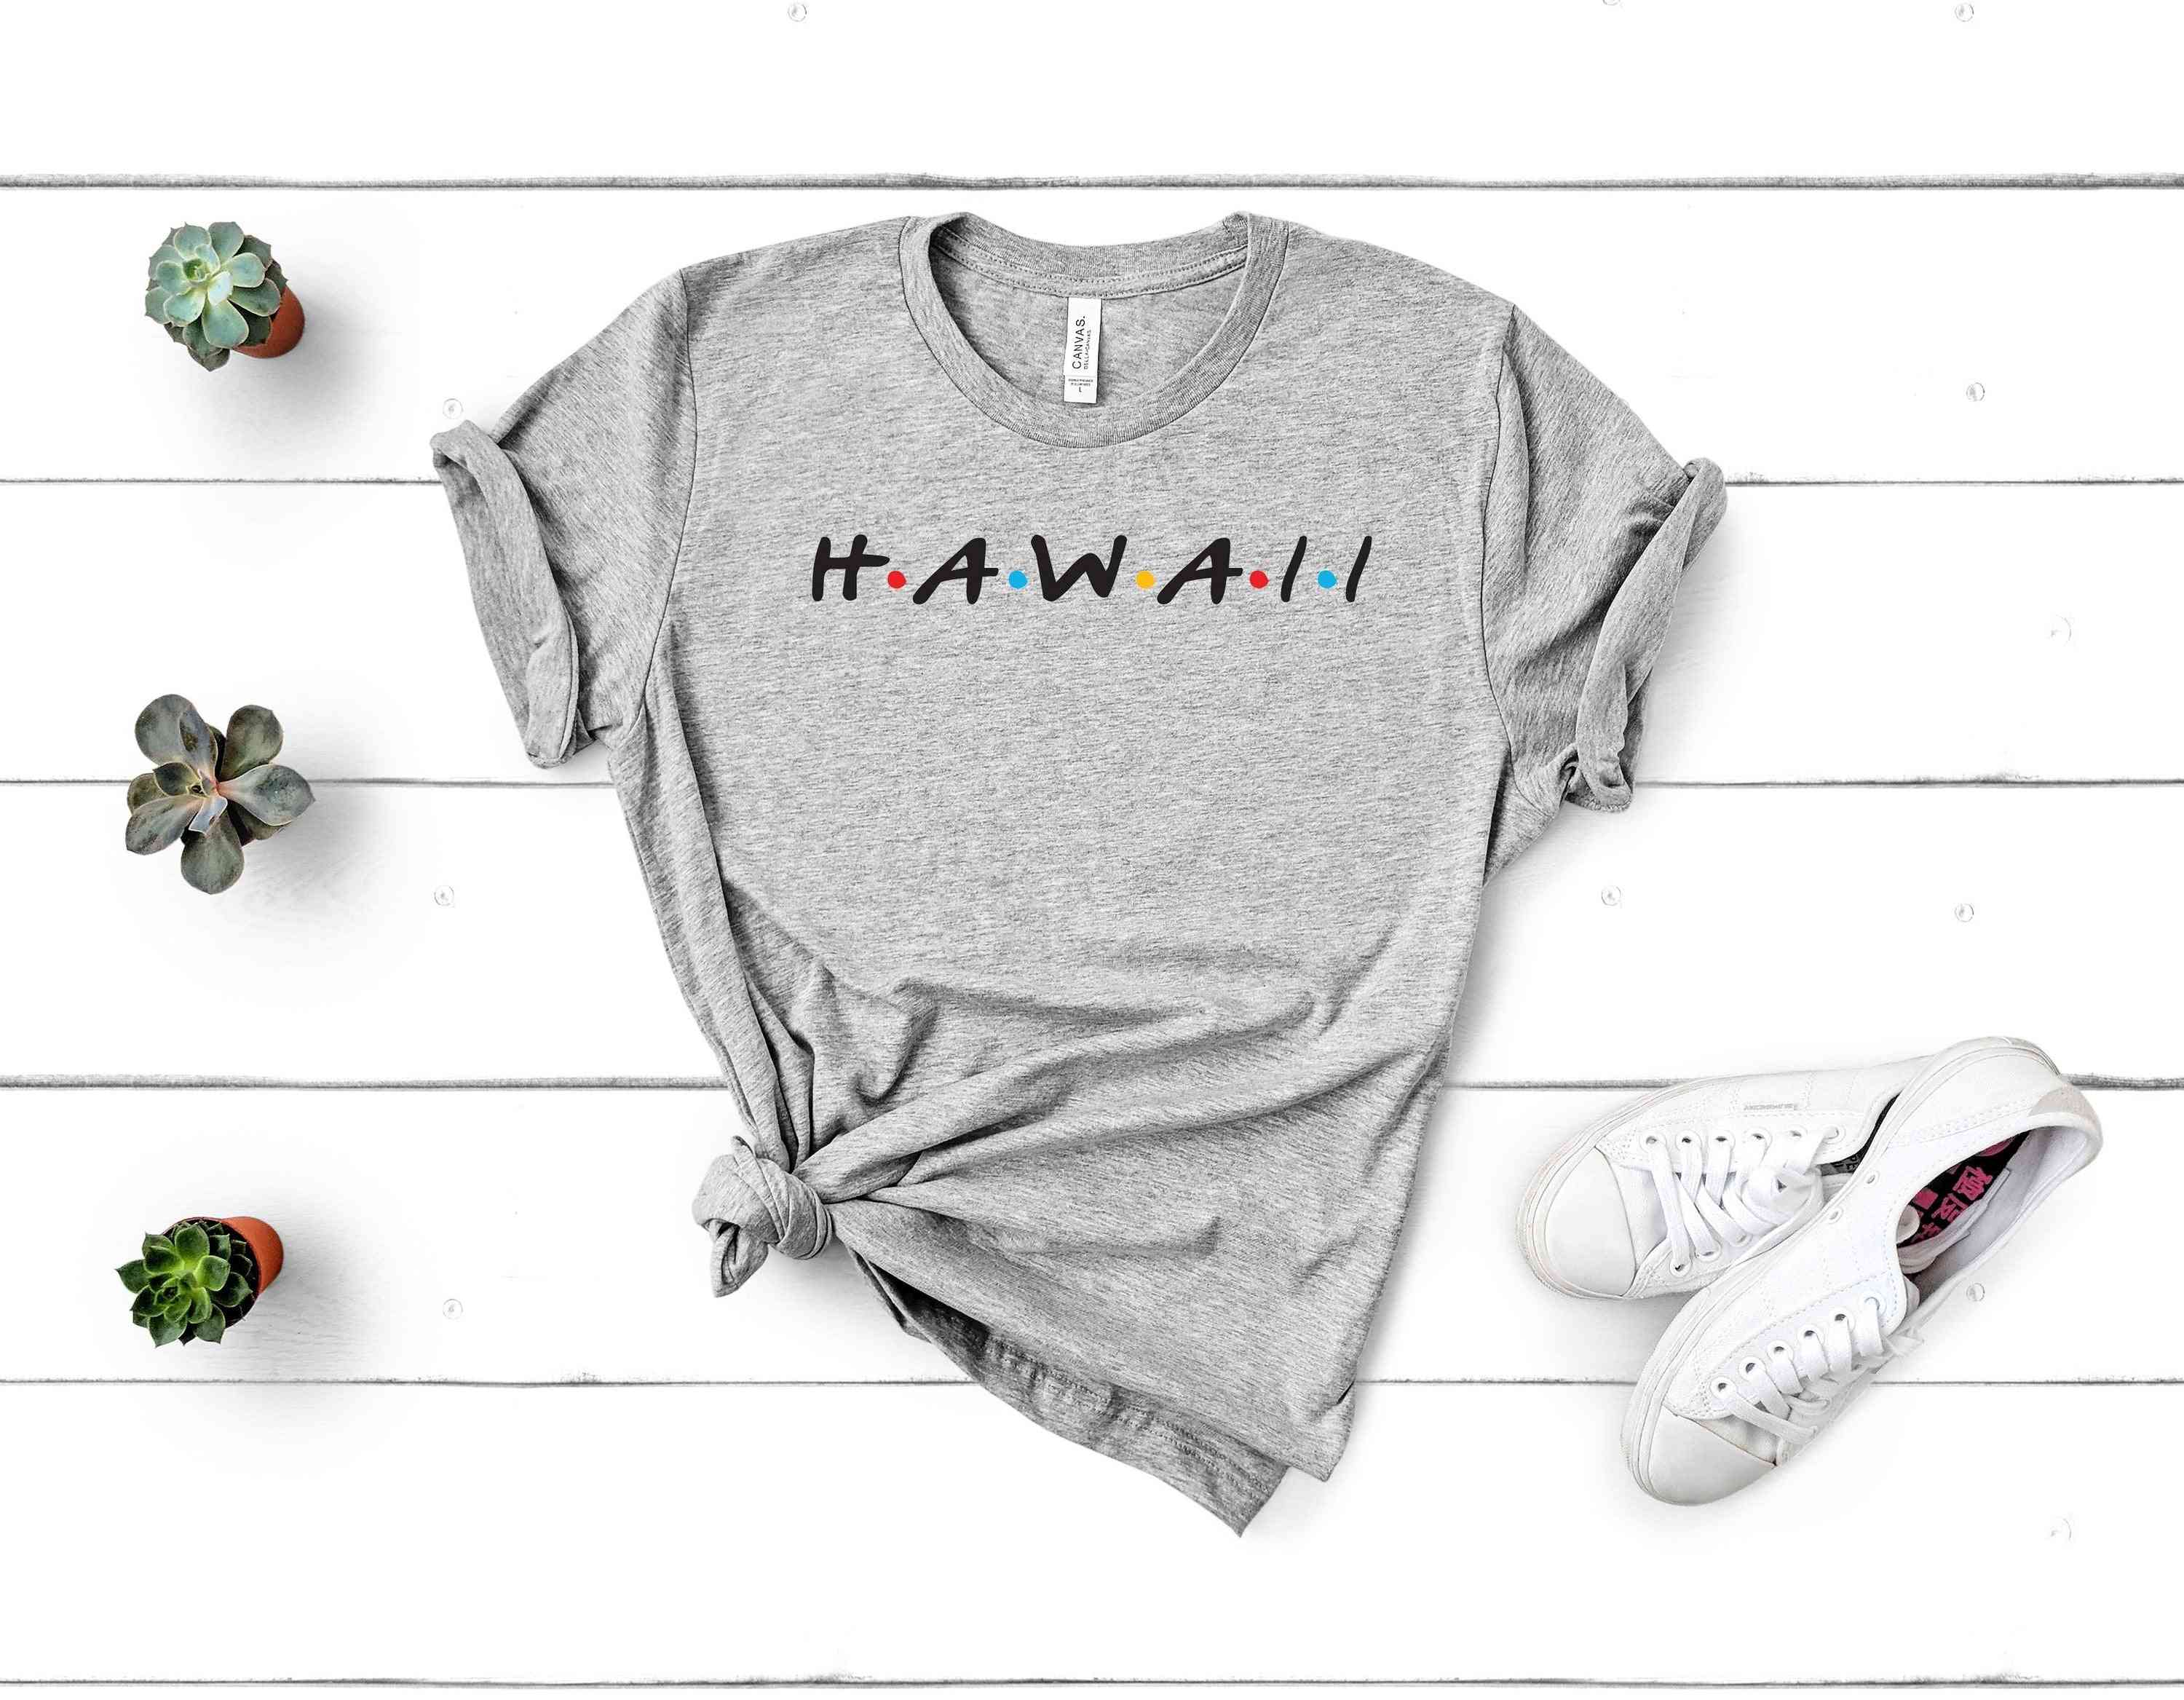 Hawaii Letter Print, Short Sleeve T-shirt